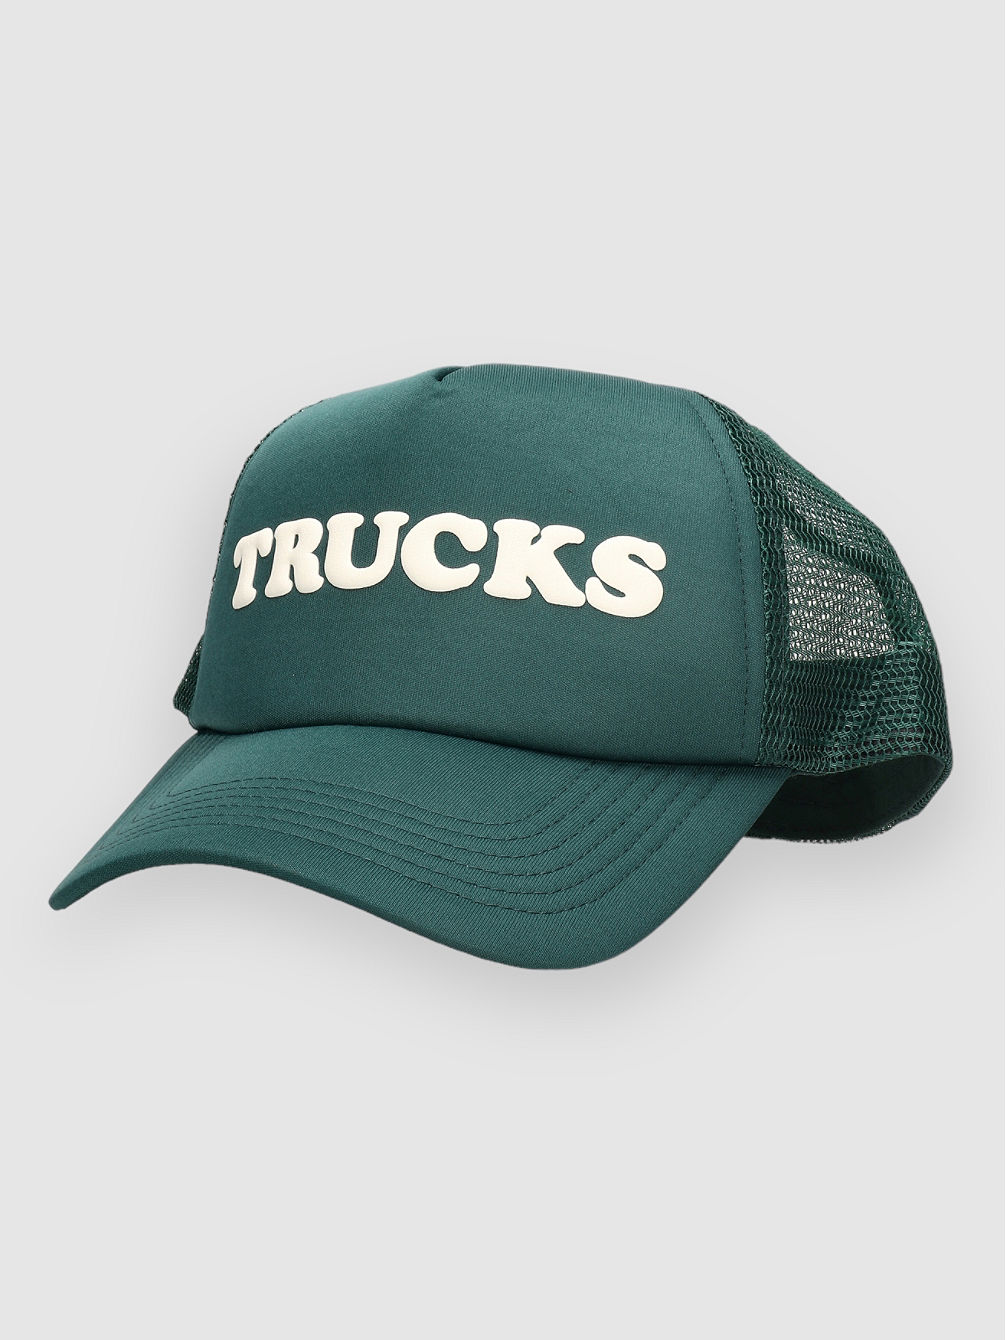 Trucks Trucker Gorra